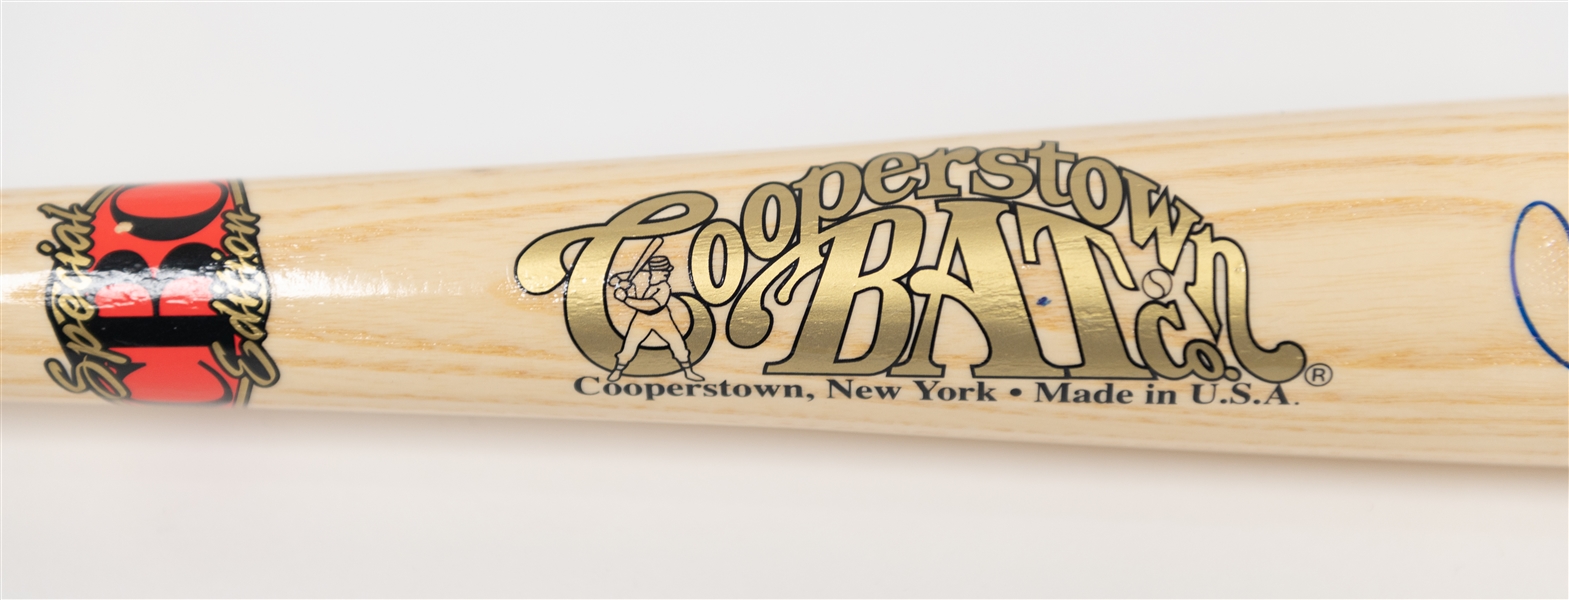 Ryne Sandberg Signed Original 1/1 Cooperstown Bat Company Baseball Bat w. Images & Stats (JSA COA) - #ed 1/1 on Bat Knob